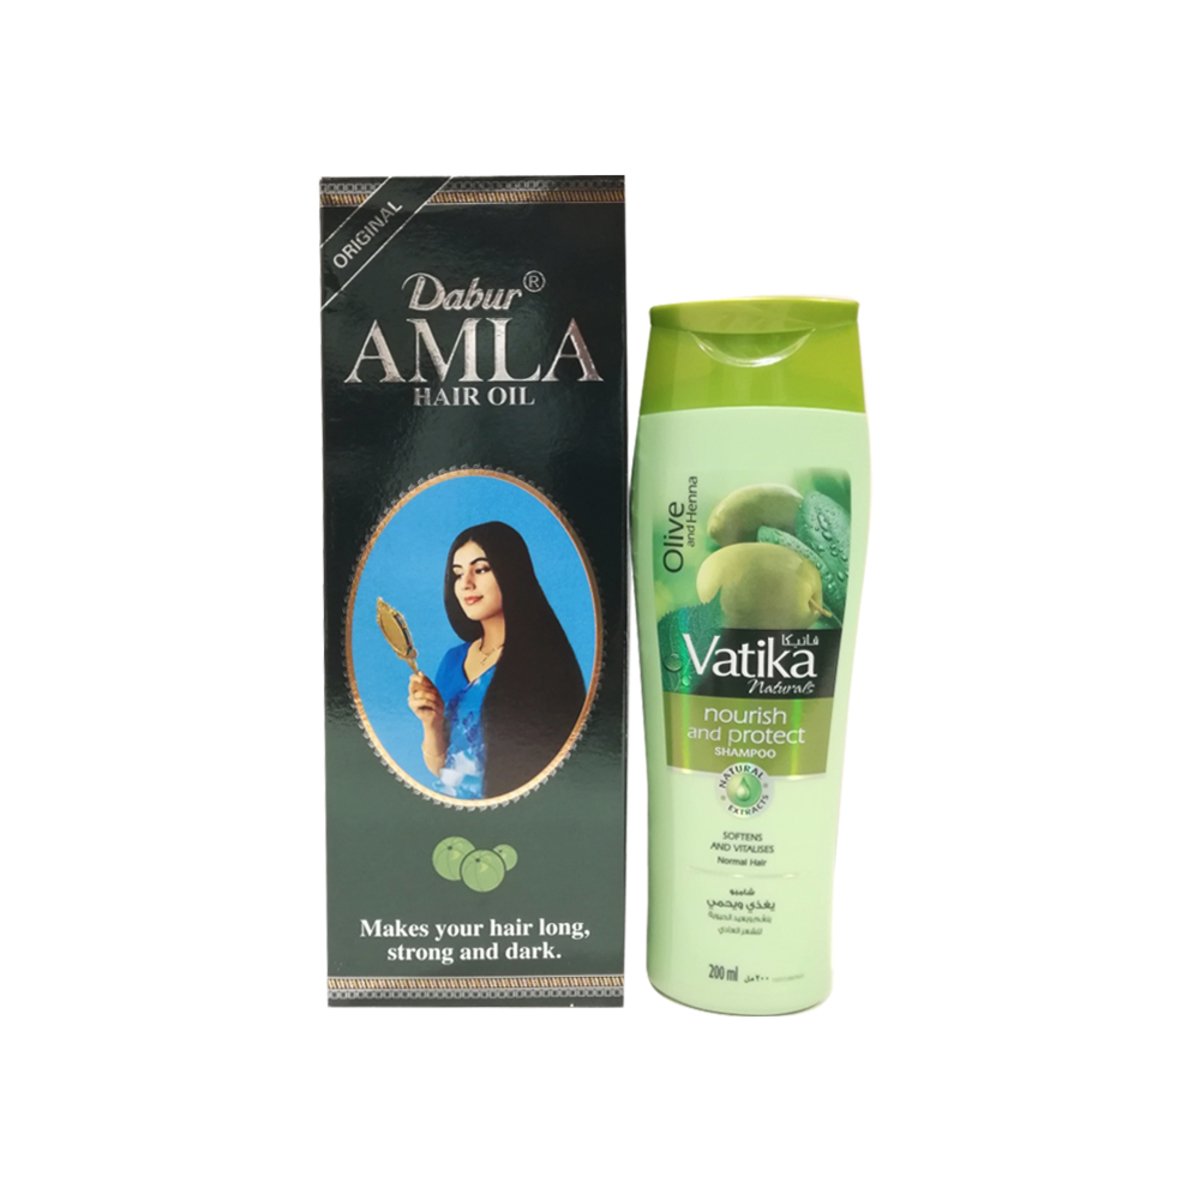 Dabur Amla Hair Oil 500ml + Vatika Shampoo 200ml